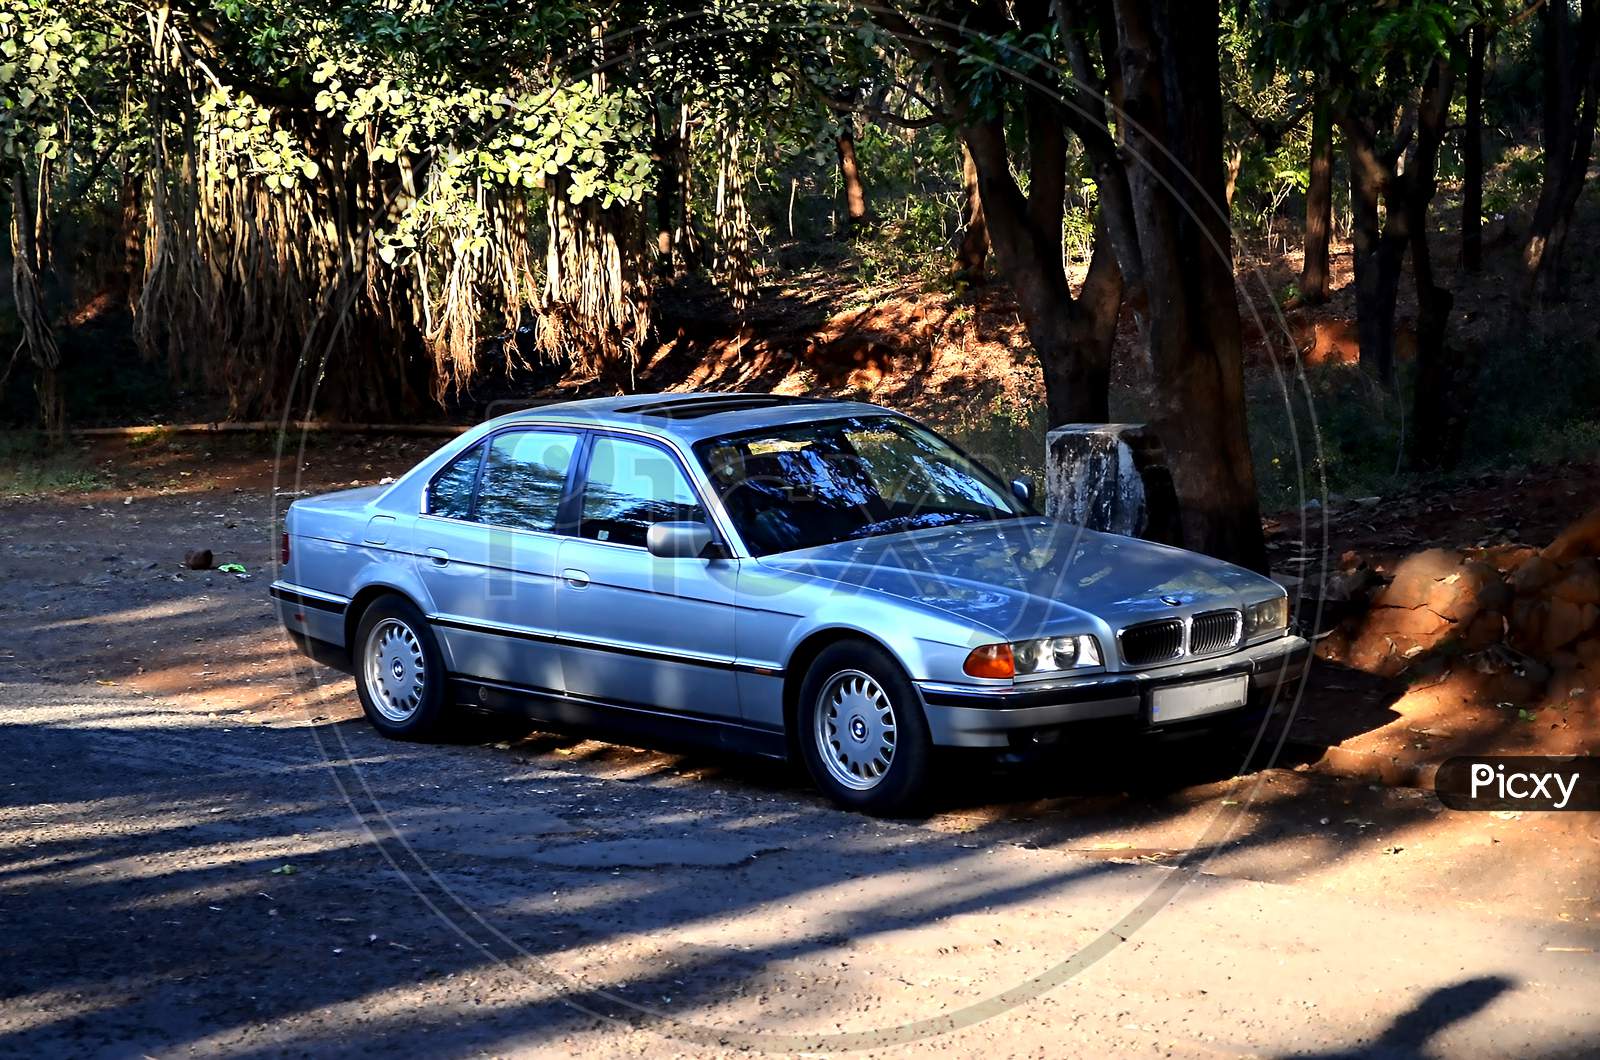 Old BMW 7 series petrol car